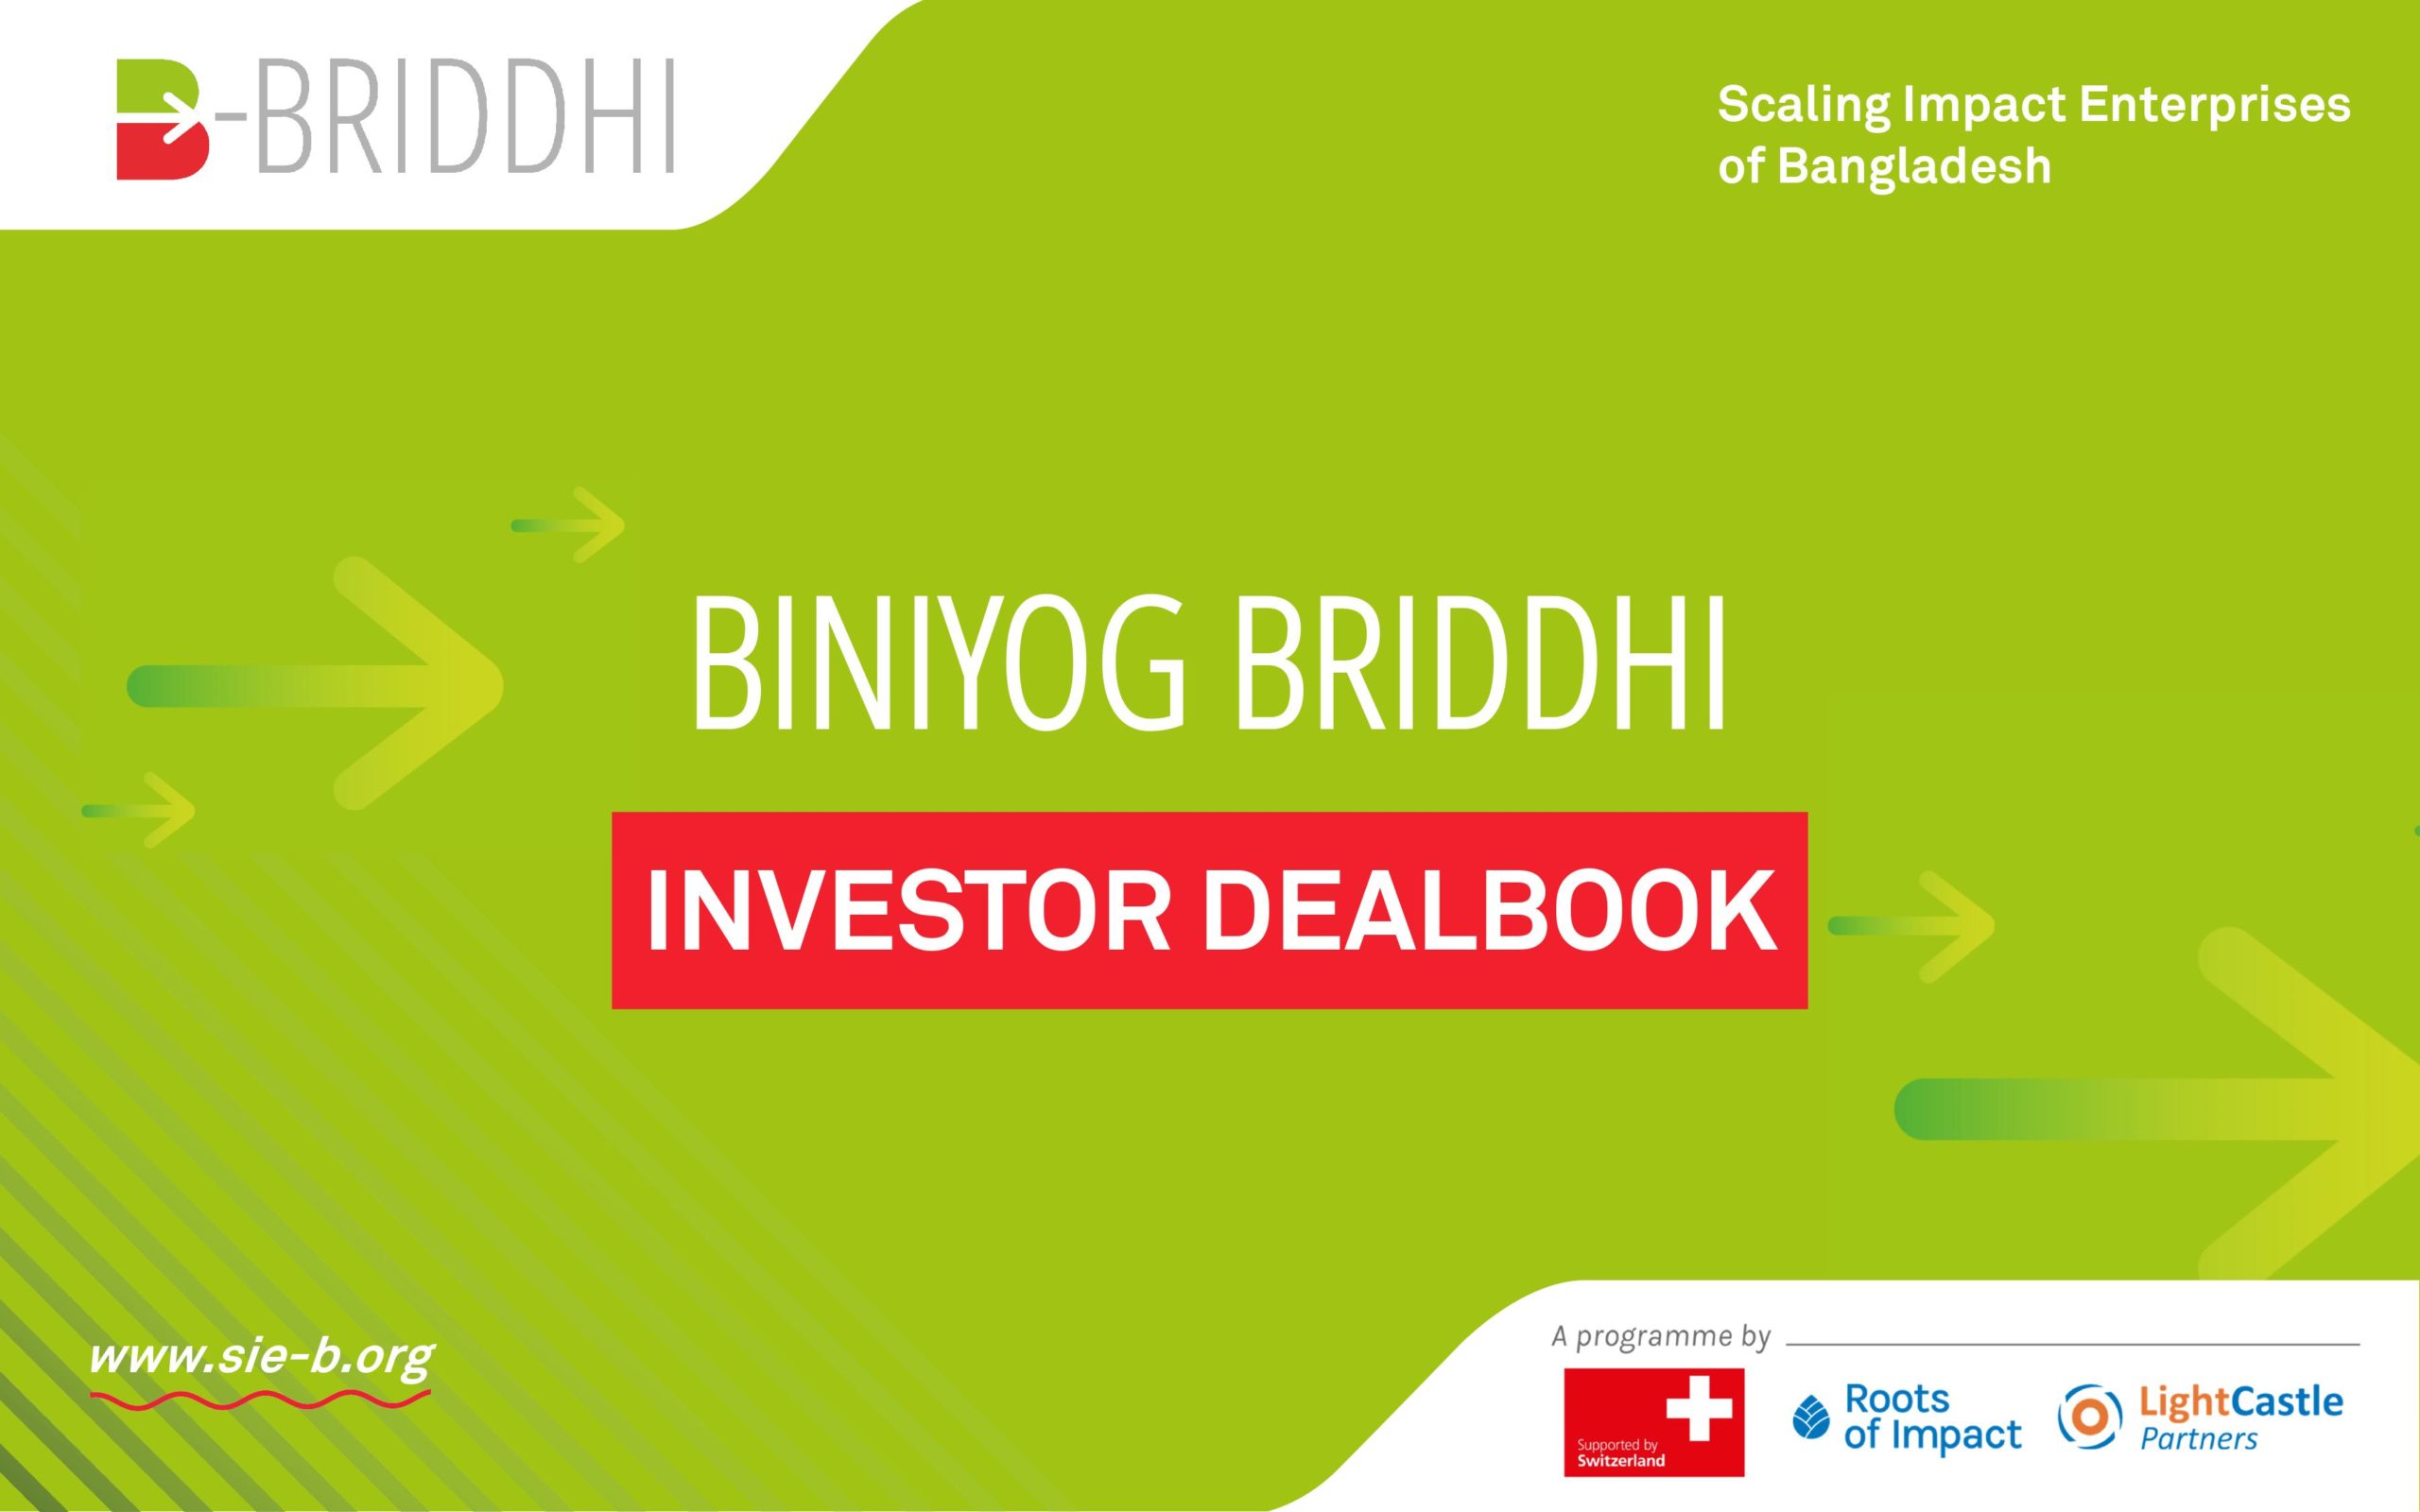 Biniyo Briddhi Investor Dealbook